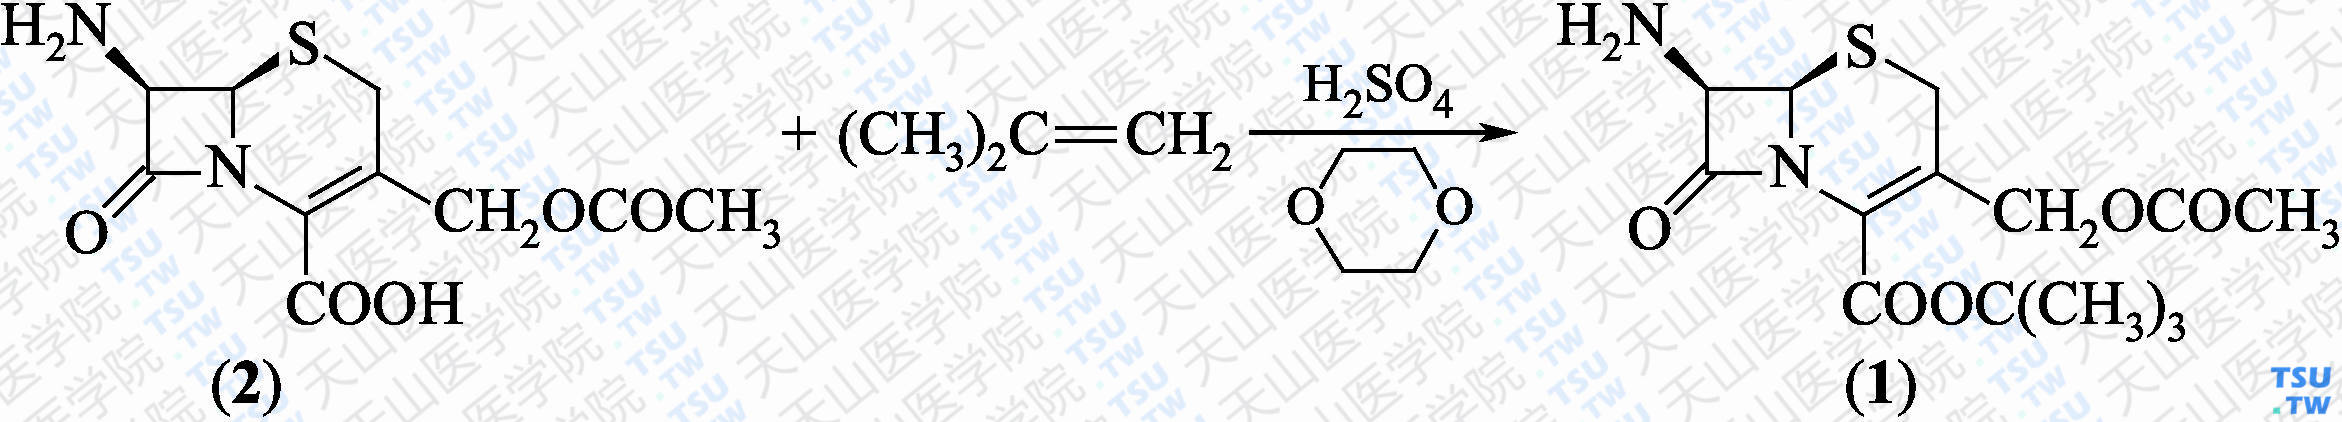 7-氨基头孢烯酸叔丁酯（分子式：C<sub>14</sub>H<sub>20</sub>N<sub>2</sub>O<sub>5</sub>S）的合成方法路线及其结构式